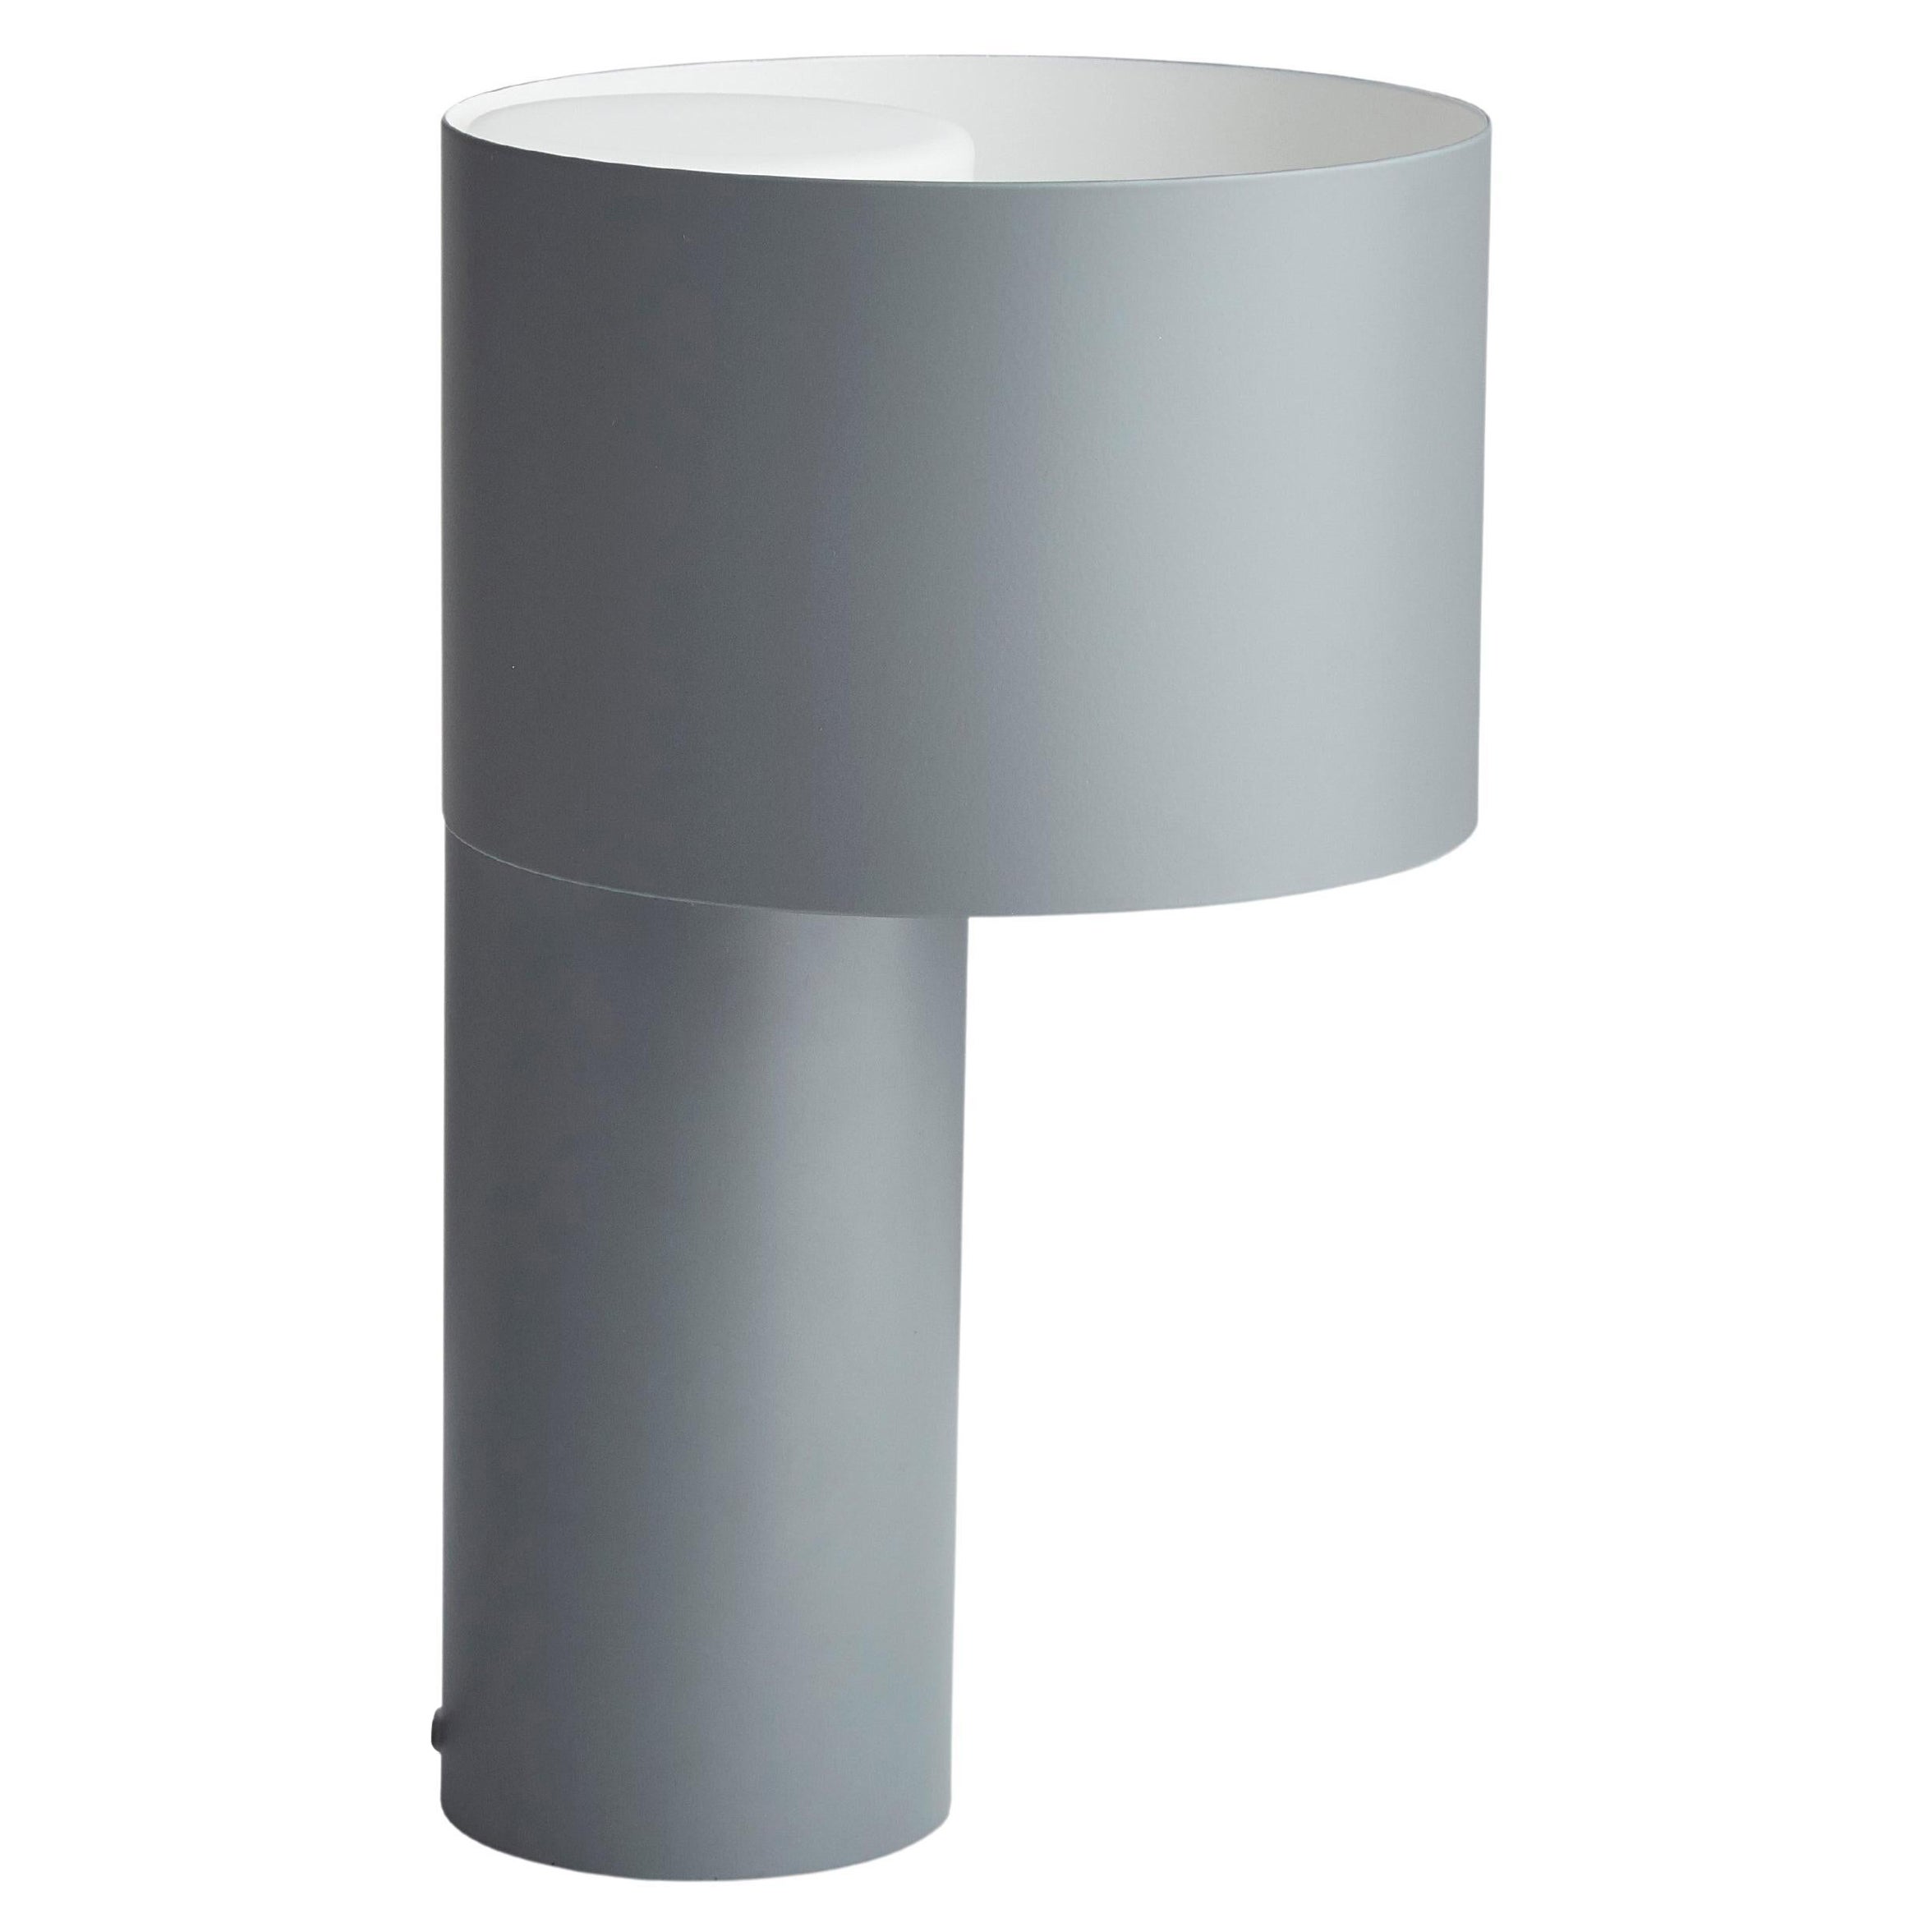 Grey Tangent Table Lamp by Frederik Kurzweg